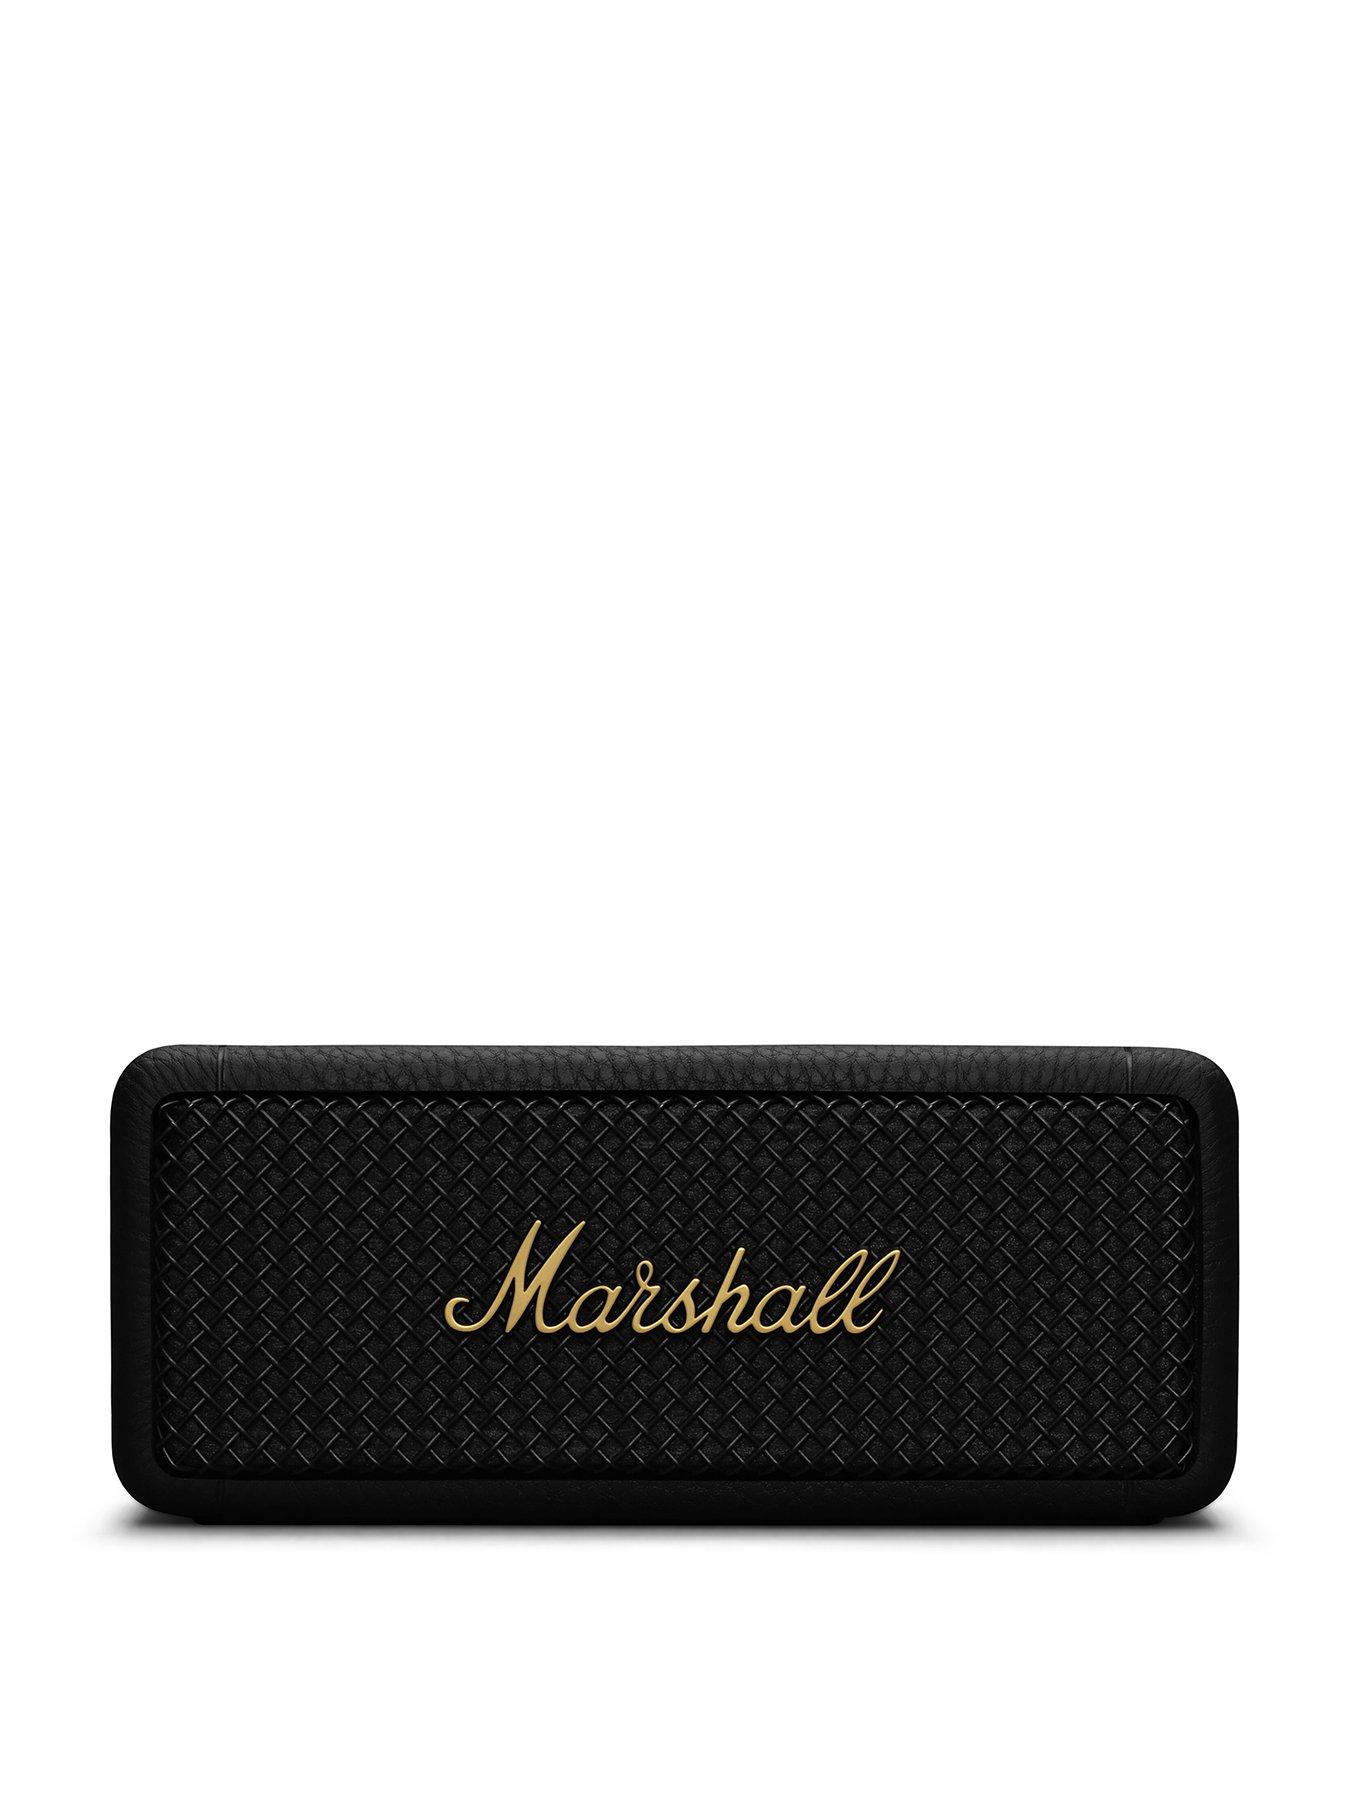 Marshall Emberton II Bluetooth Speaker Black  Brass